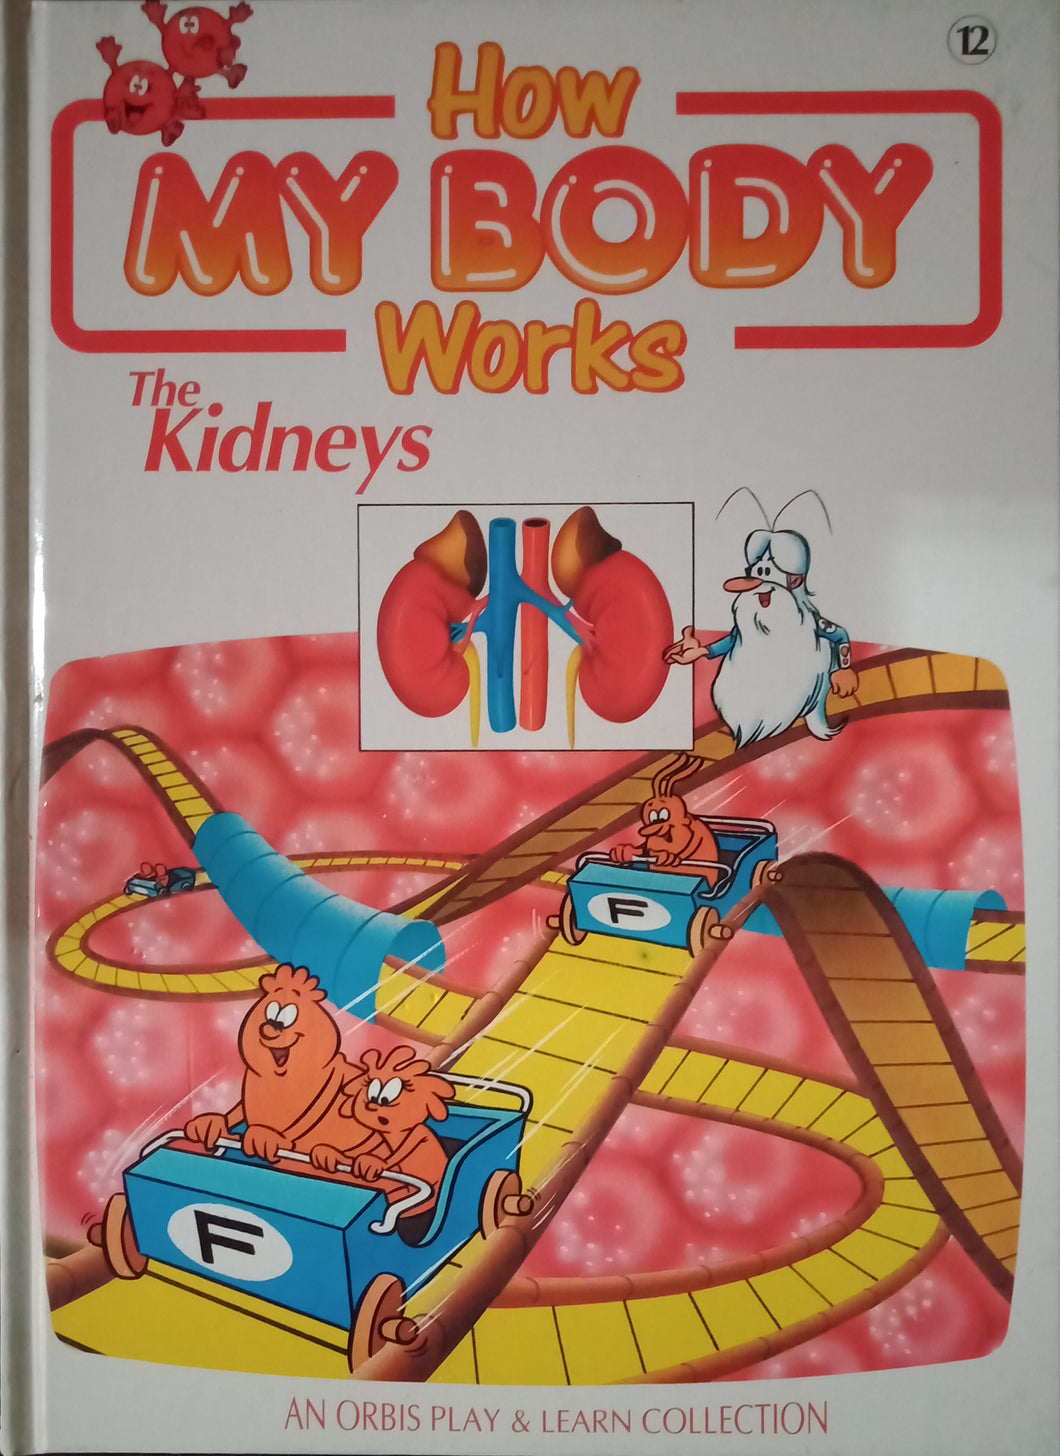 How My Body Works The Kidneys